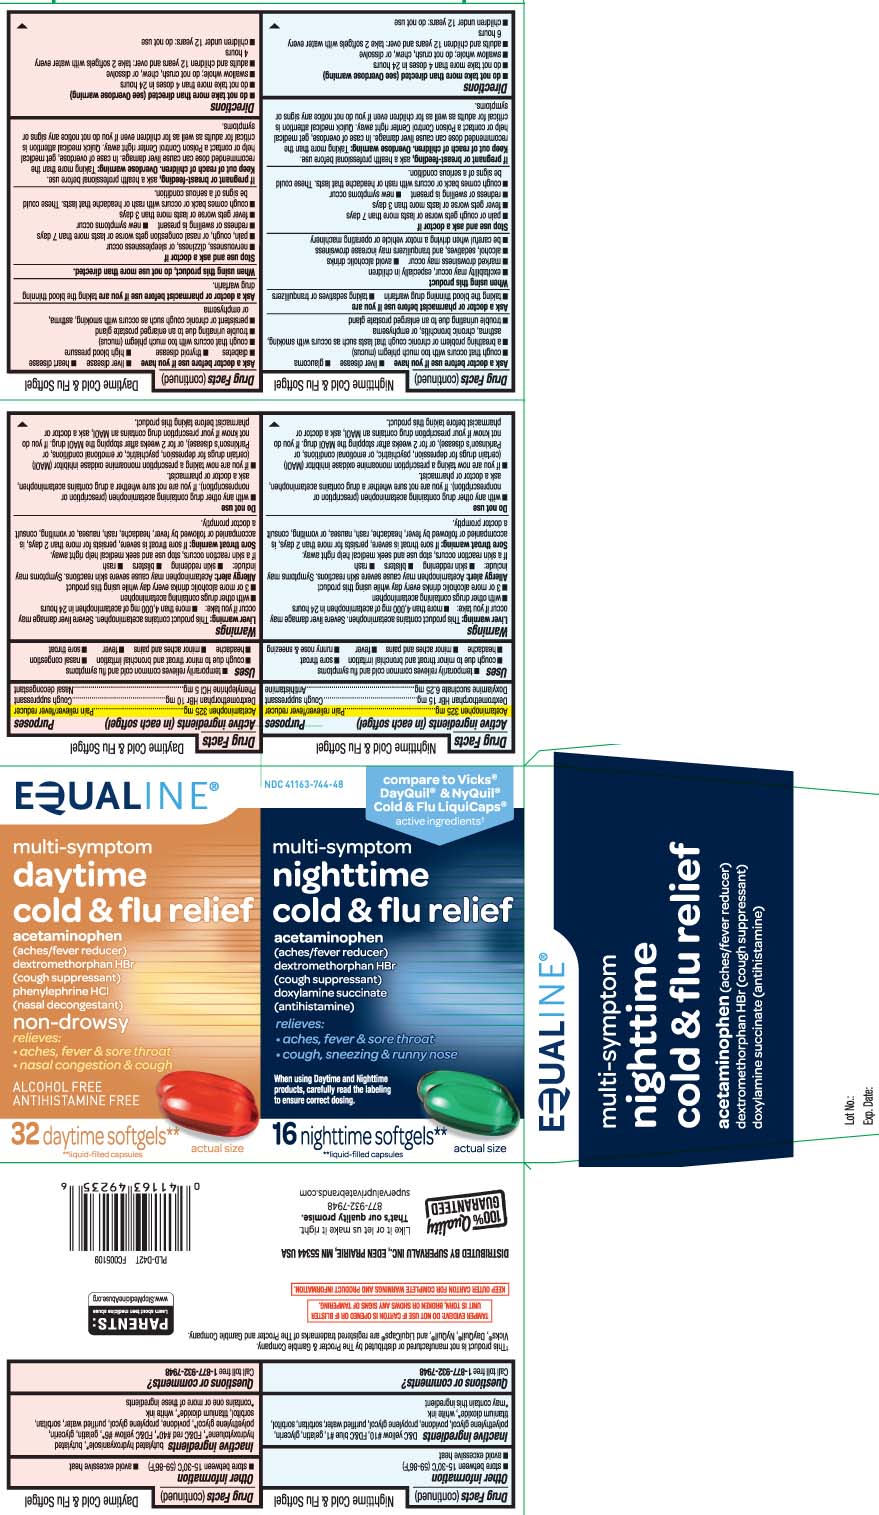 Acetaminophen 325 mg, Dextromethorphan HBr 10 mg, Phenylephrine HCI 5 mg, Acetaminophen 325 mg, Dextromethorphan HBr 15 mg, Doxylamine Succinate 6.25 mg